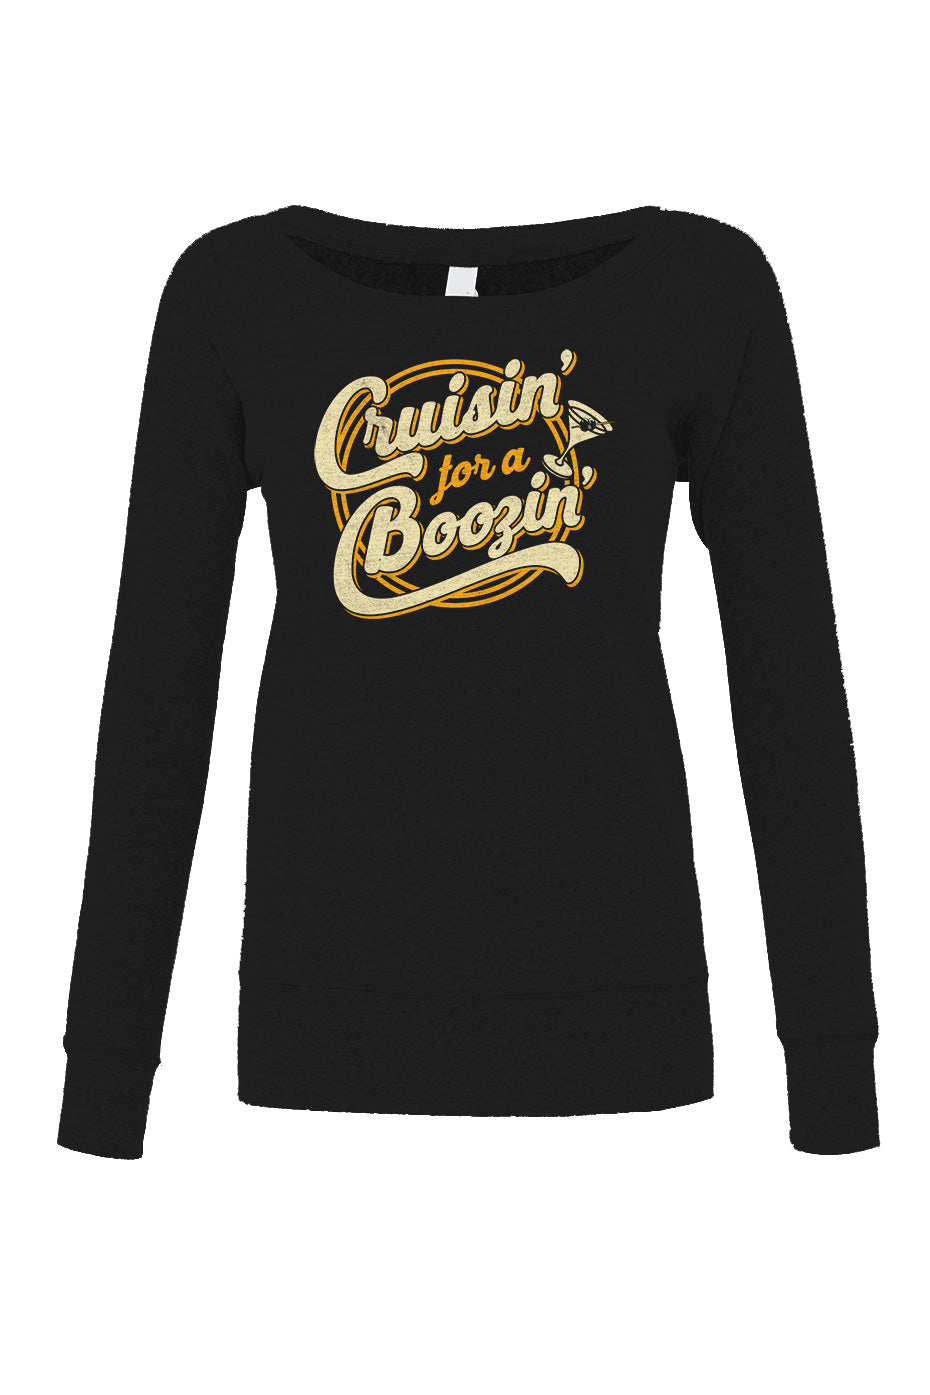 Women's Cruisin for a Boozin Scoop Neck Fleece - Funny Drinking Shirt